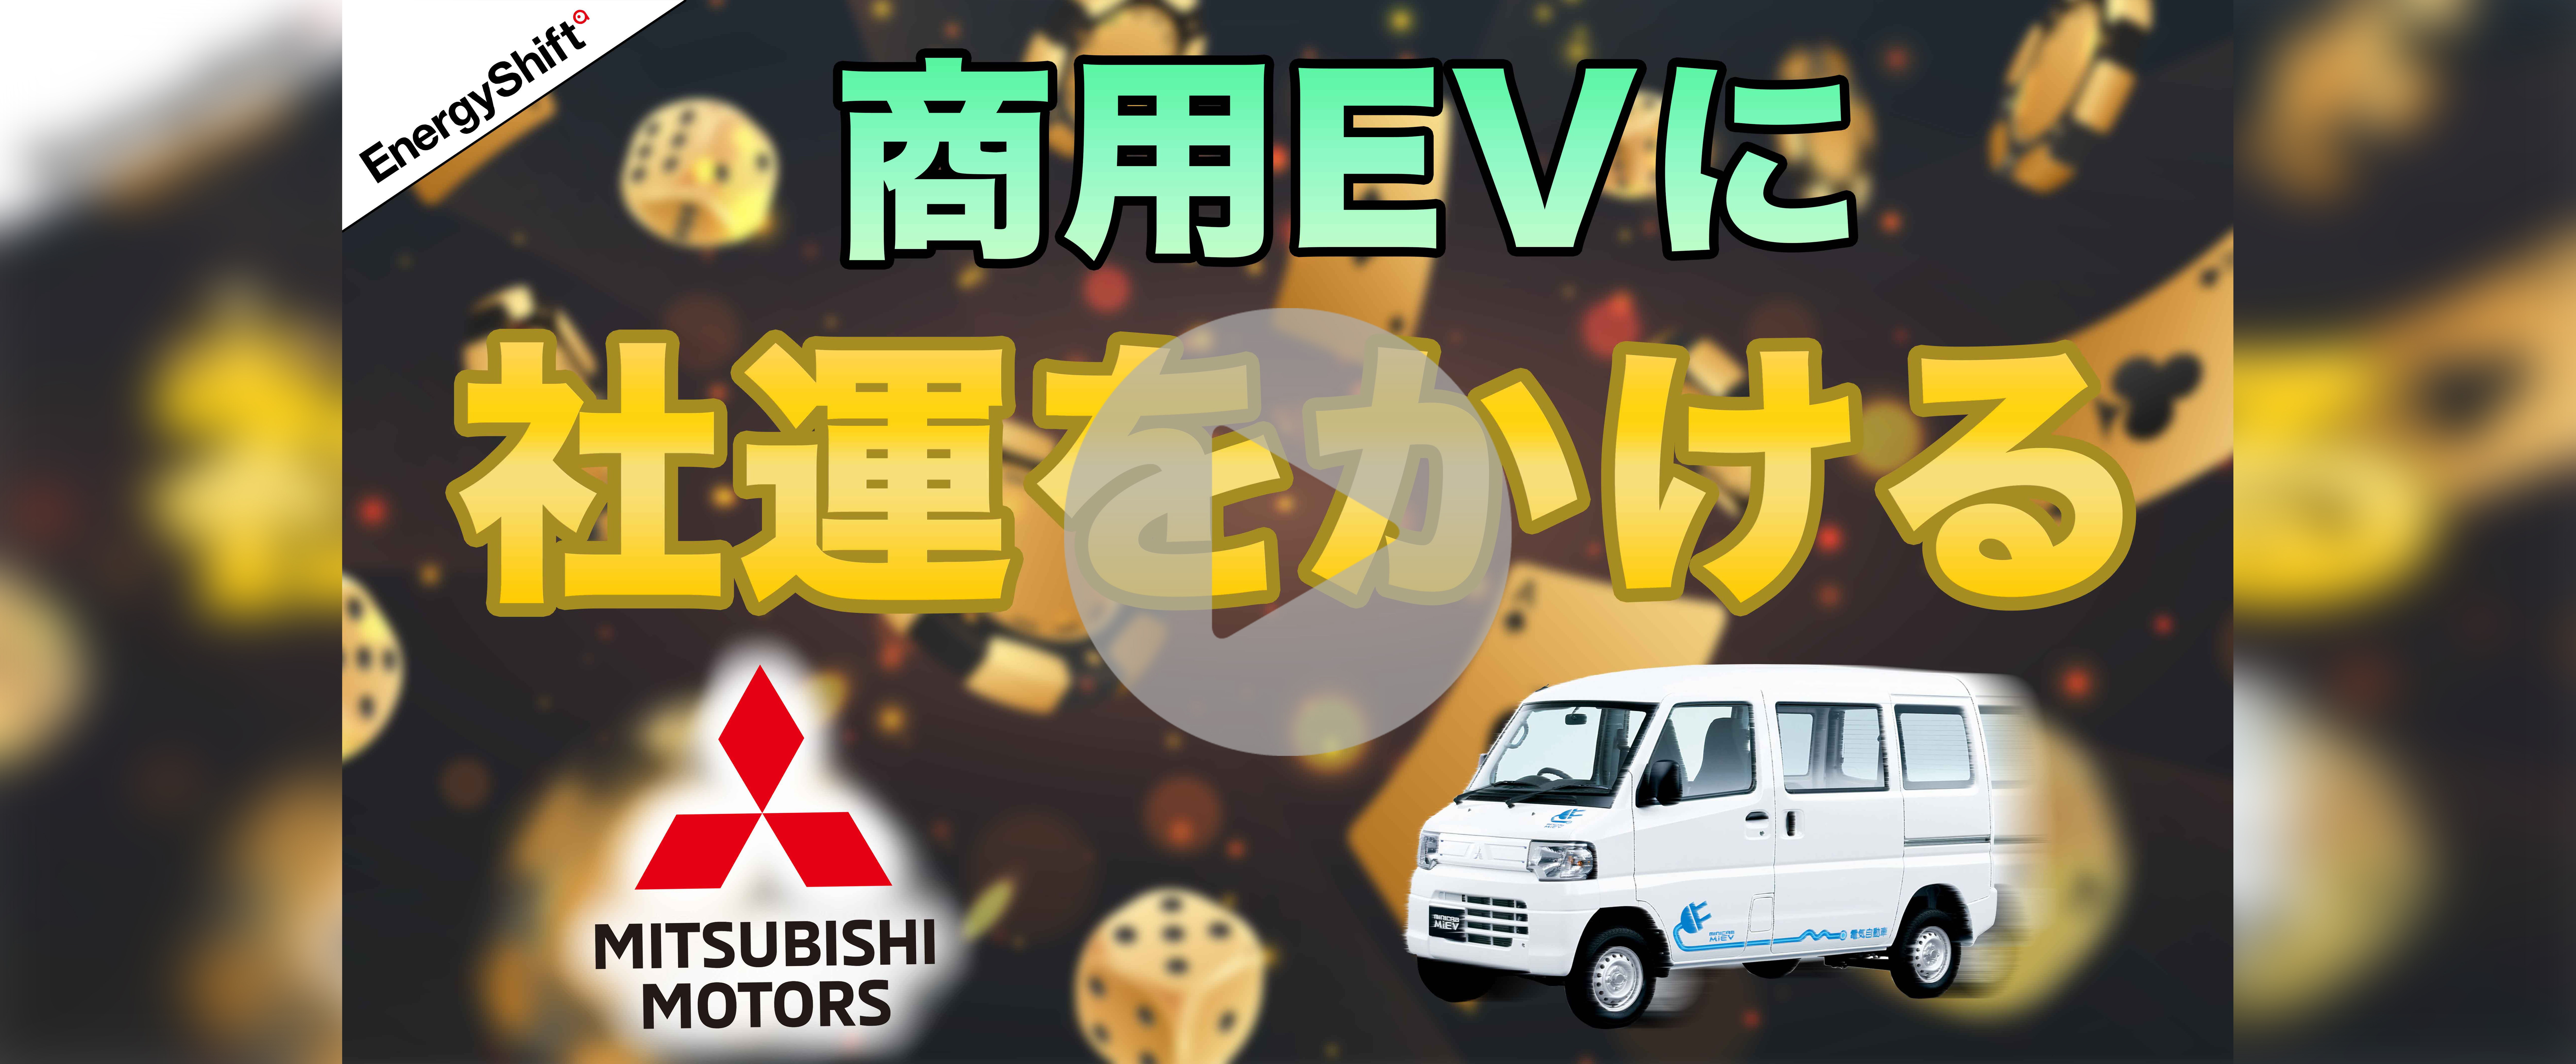 【YouTube】軽EVに命掛けの三菱自動車